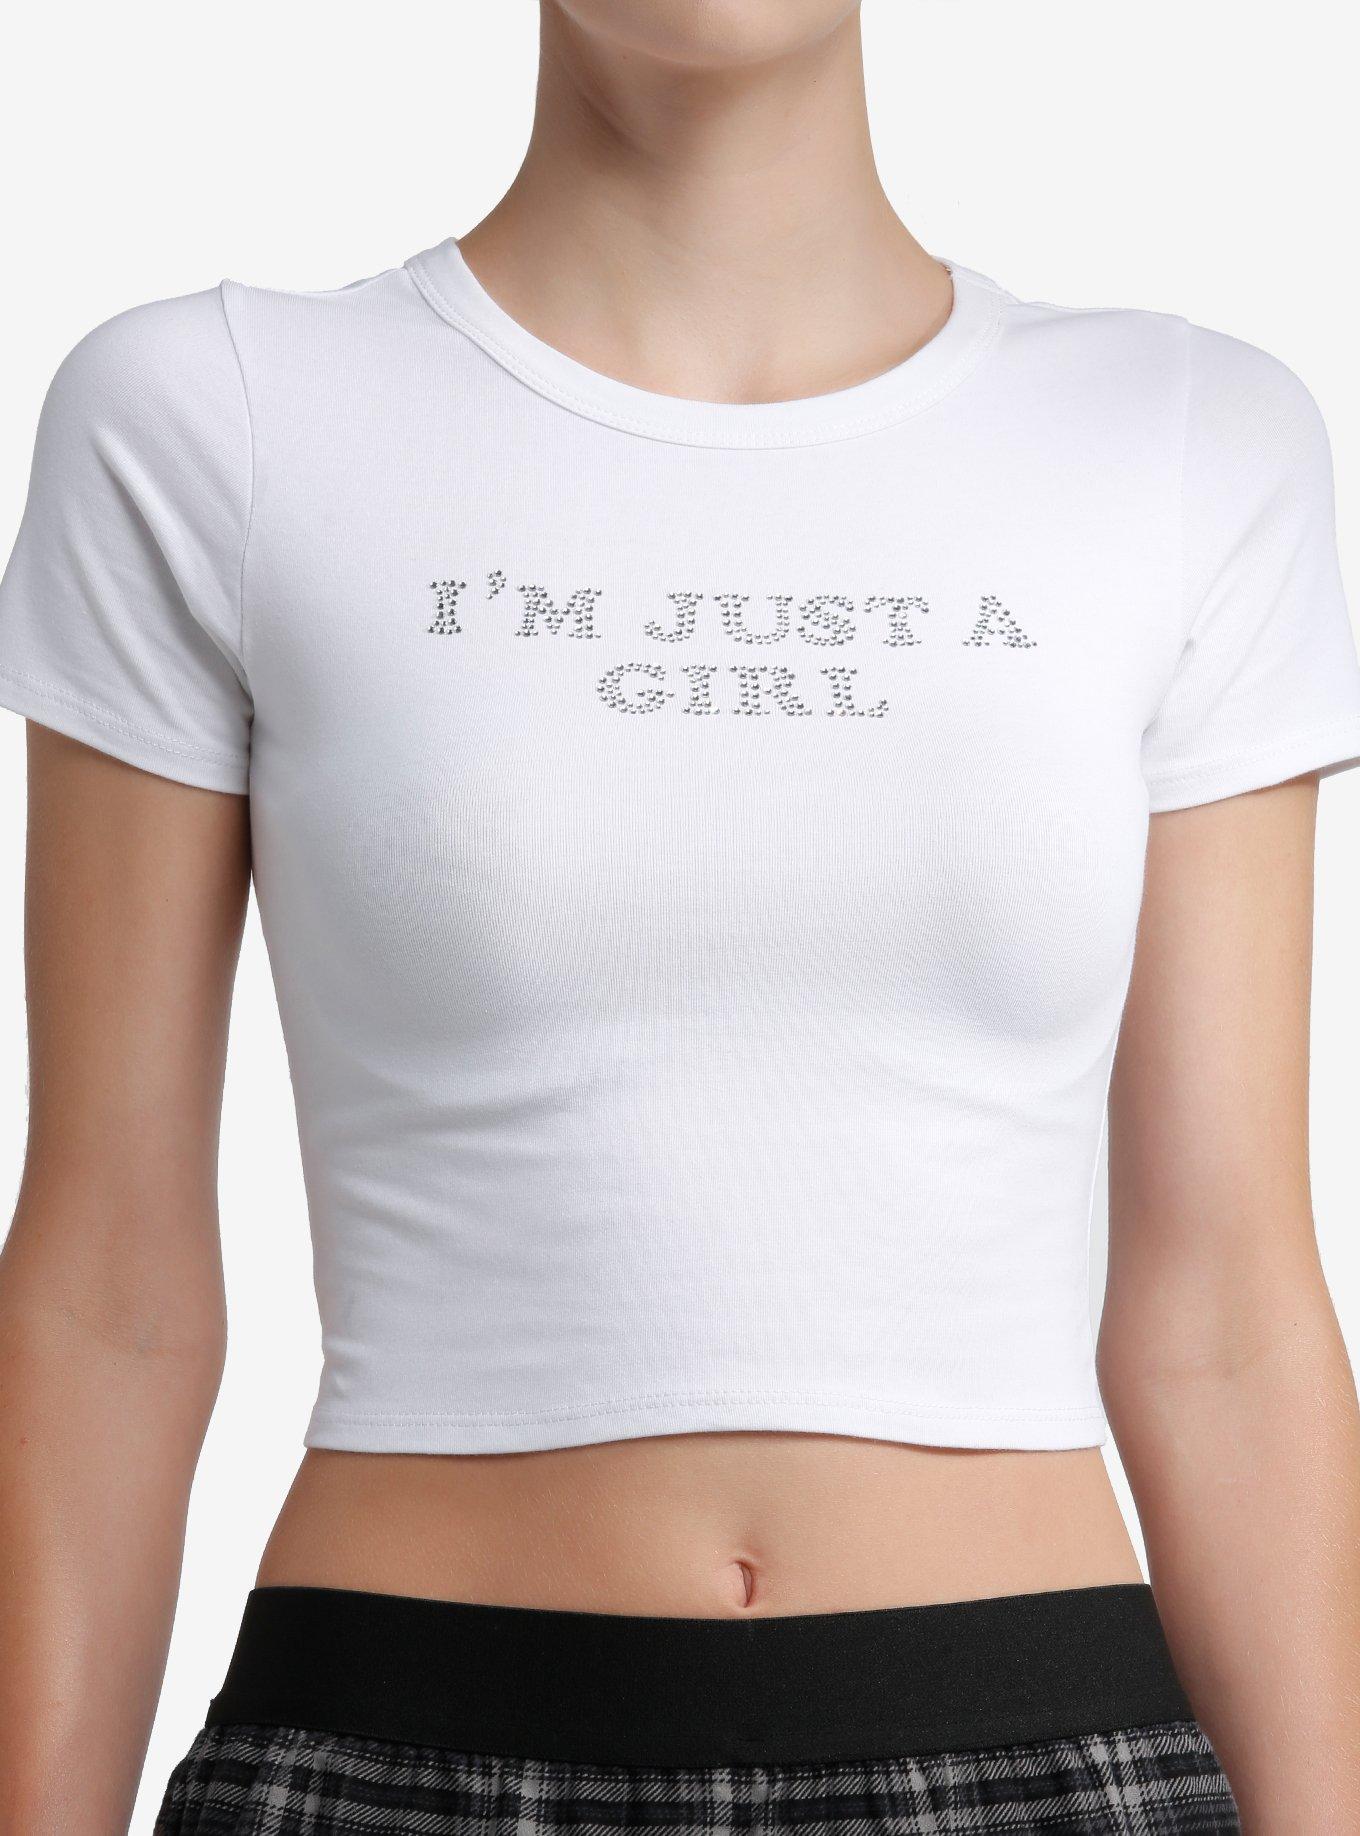 I'm Just A Girl Rhinestone Girls Baby T-Shirt, SILVER, hi-res